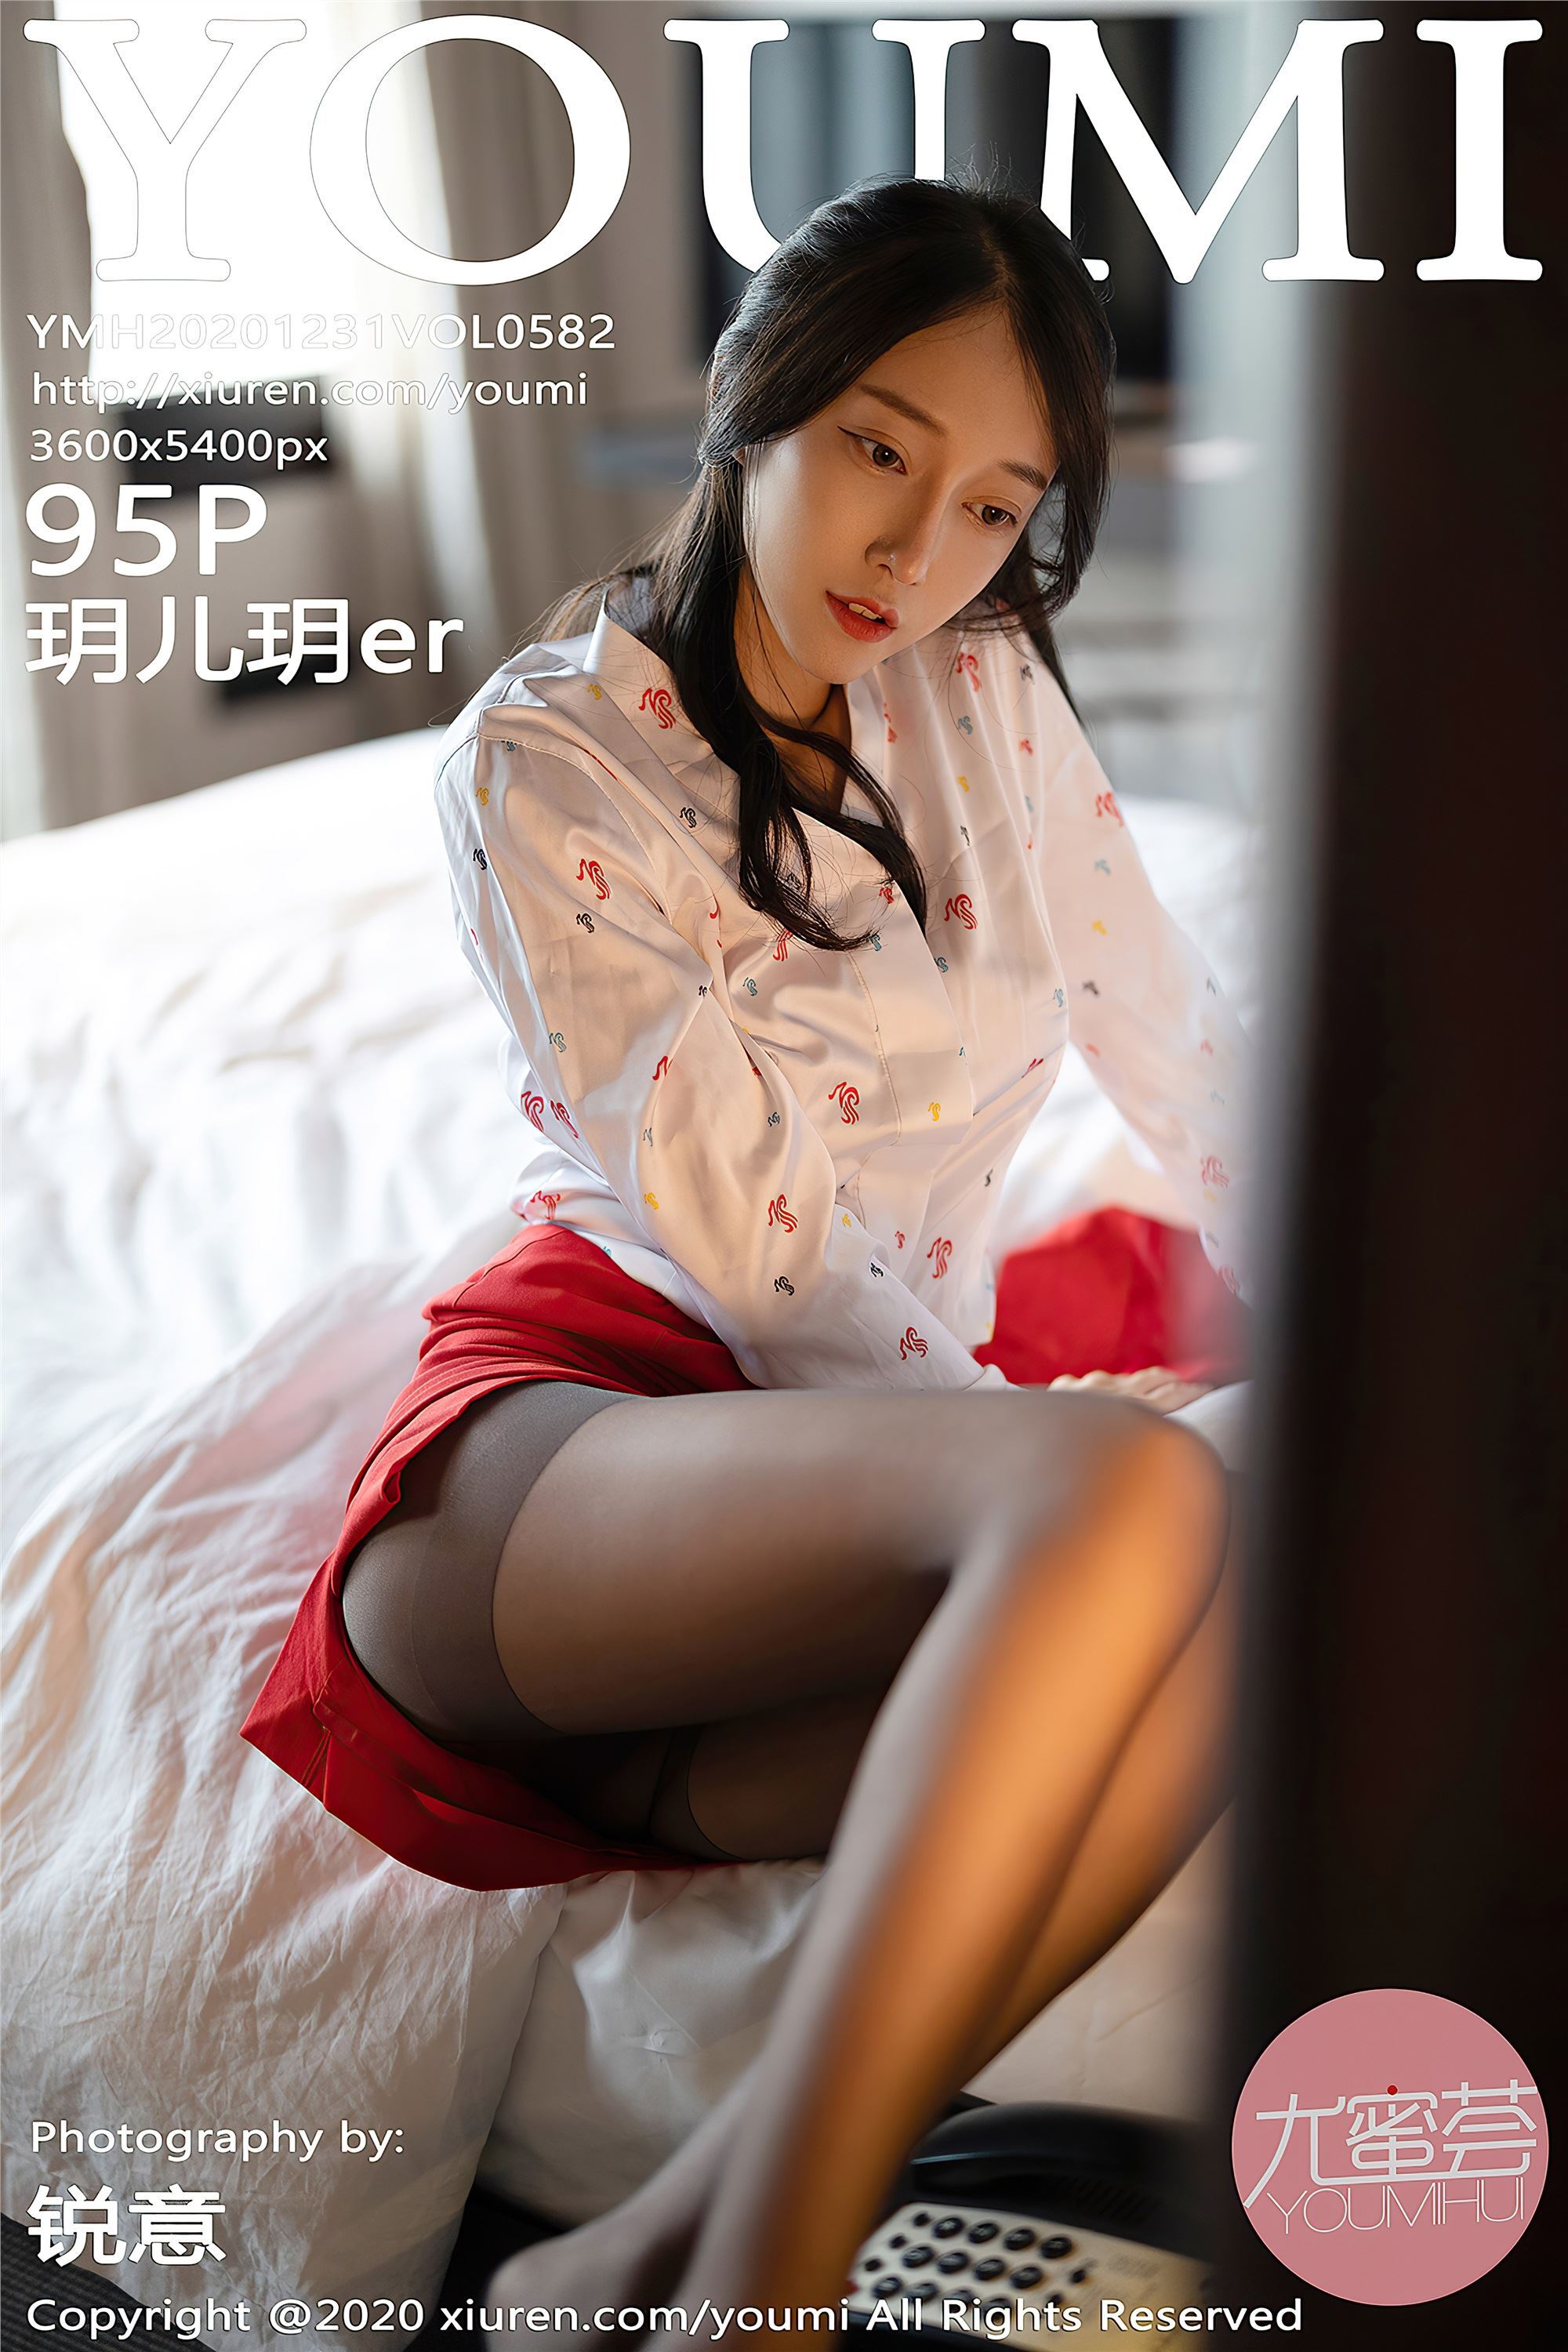 Youmi you mi Hui 2020.12.31 vol.582 Yue Er Yue er